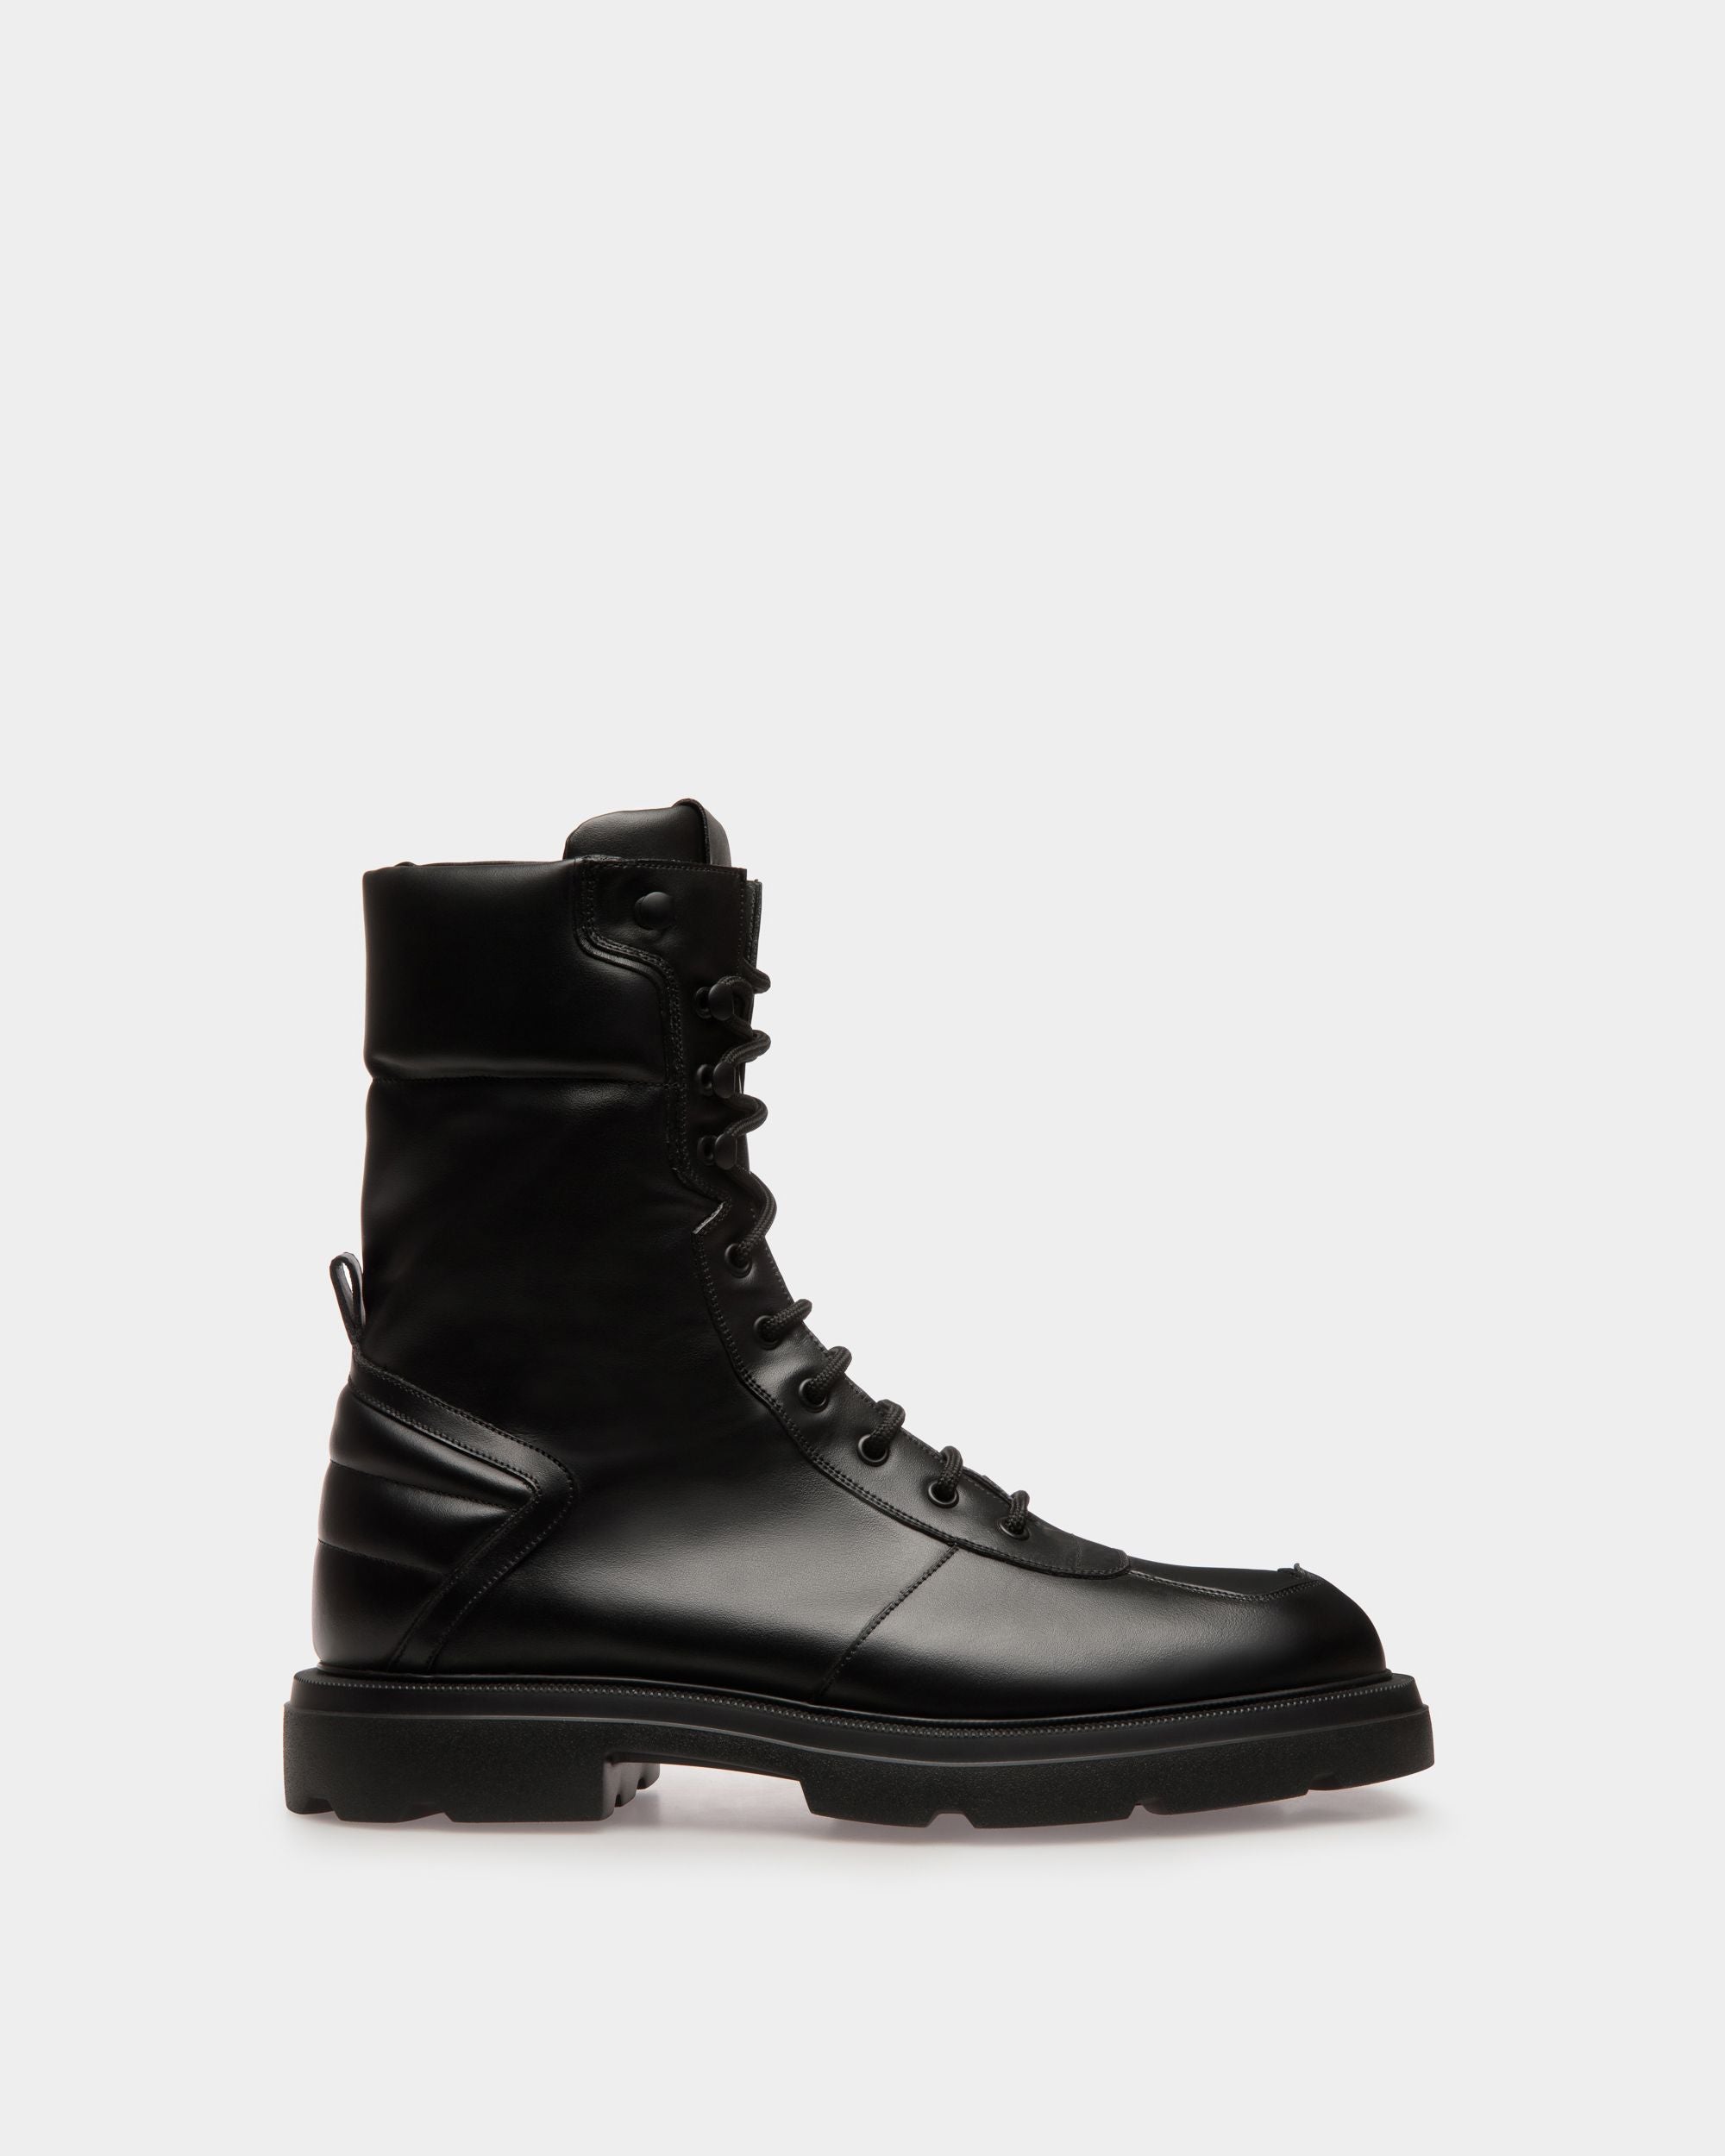 Zendi | Men's Boots | Black Leather | Bally | Still Life Side